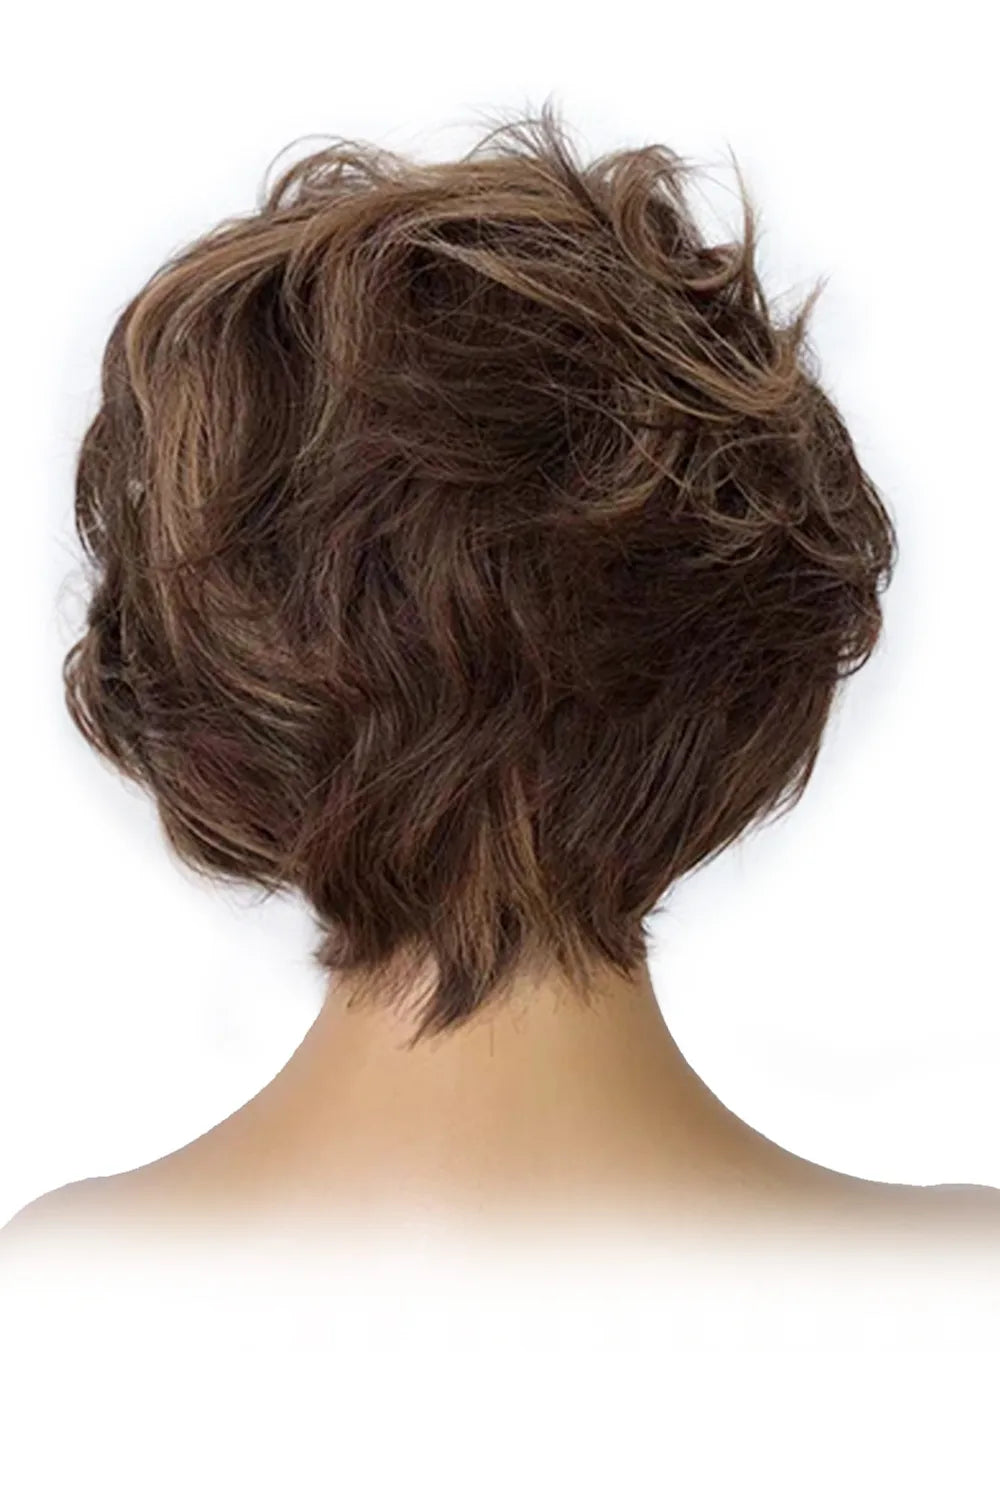 pixie-cut-wig-13x6-transparent-hd-lace-wave-human-hair-brown-1